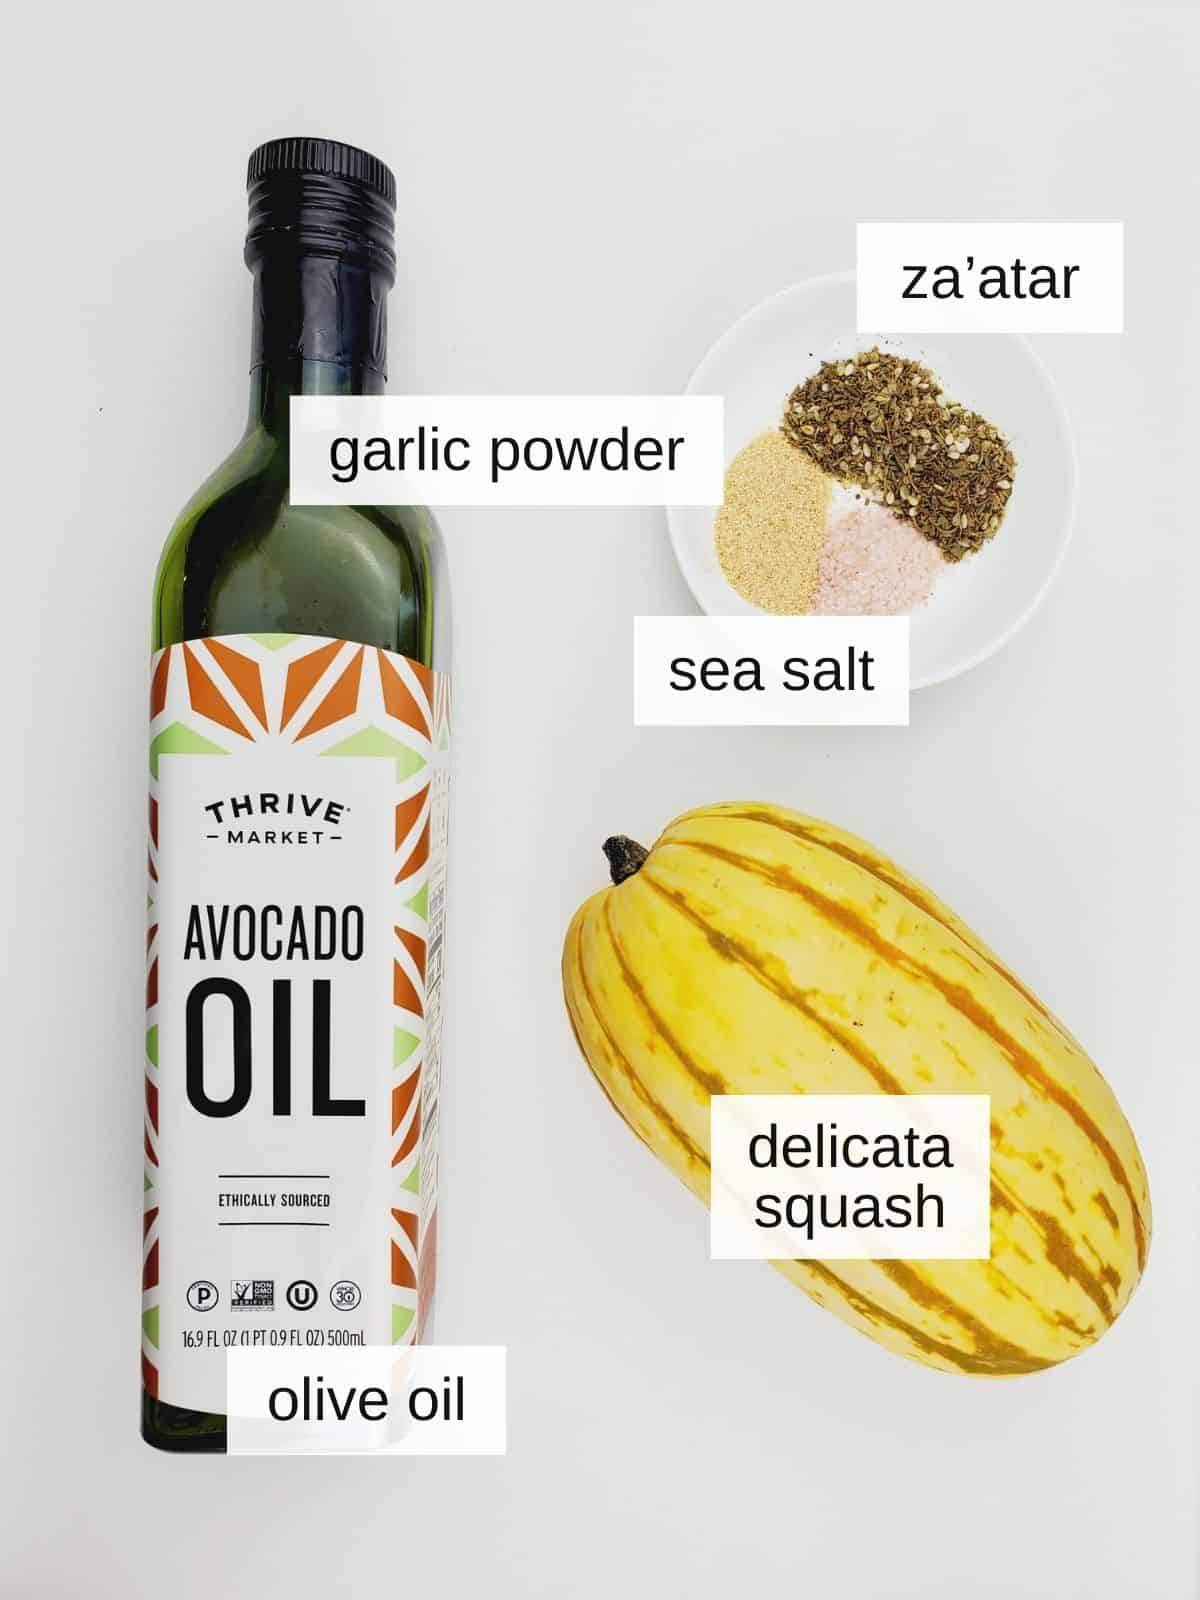 ingredients for delicata squash fries, including delicata, avocado oil sea salt, garlic, and zata'ar spices.